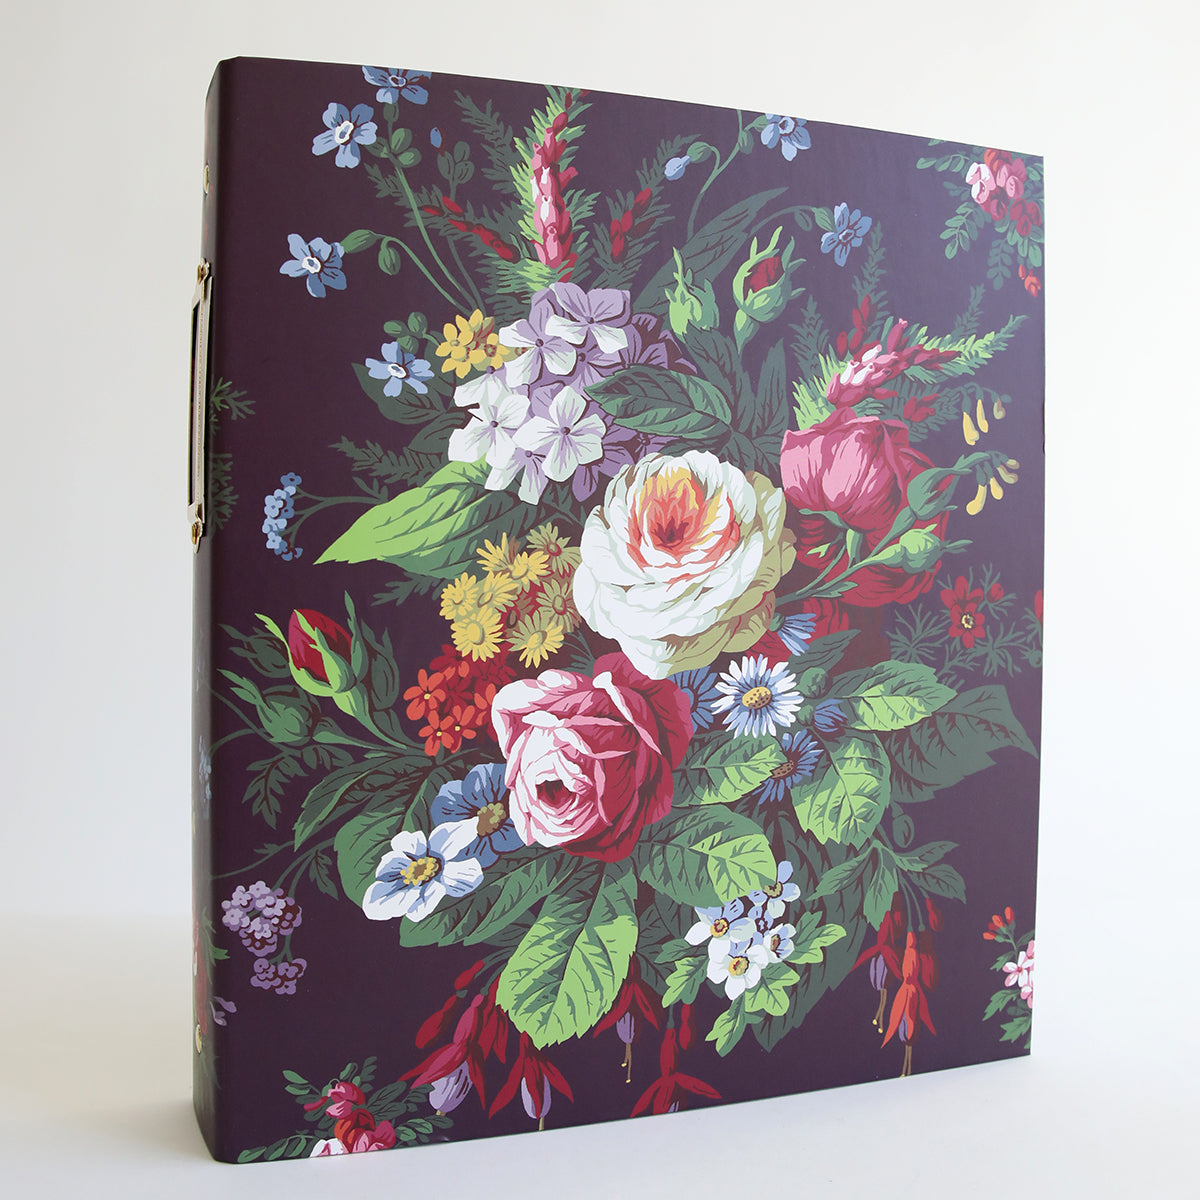 A Die Storage Binder - Astrid Floral Pattern with a floral design on the binder.